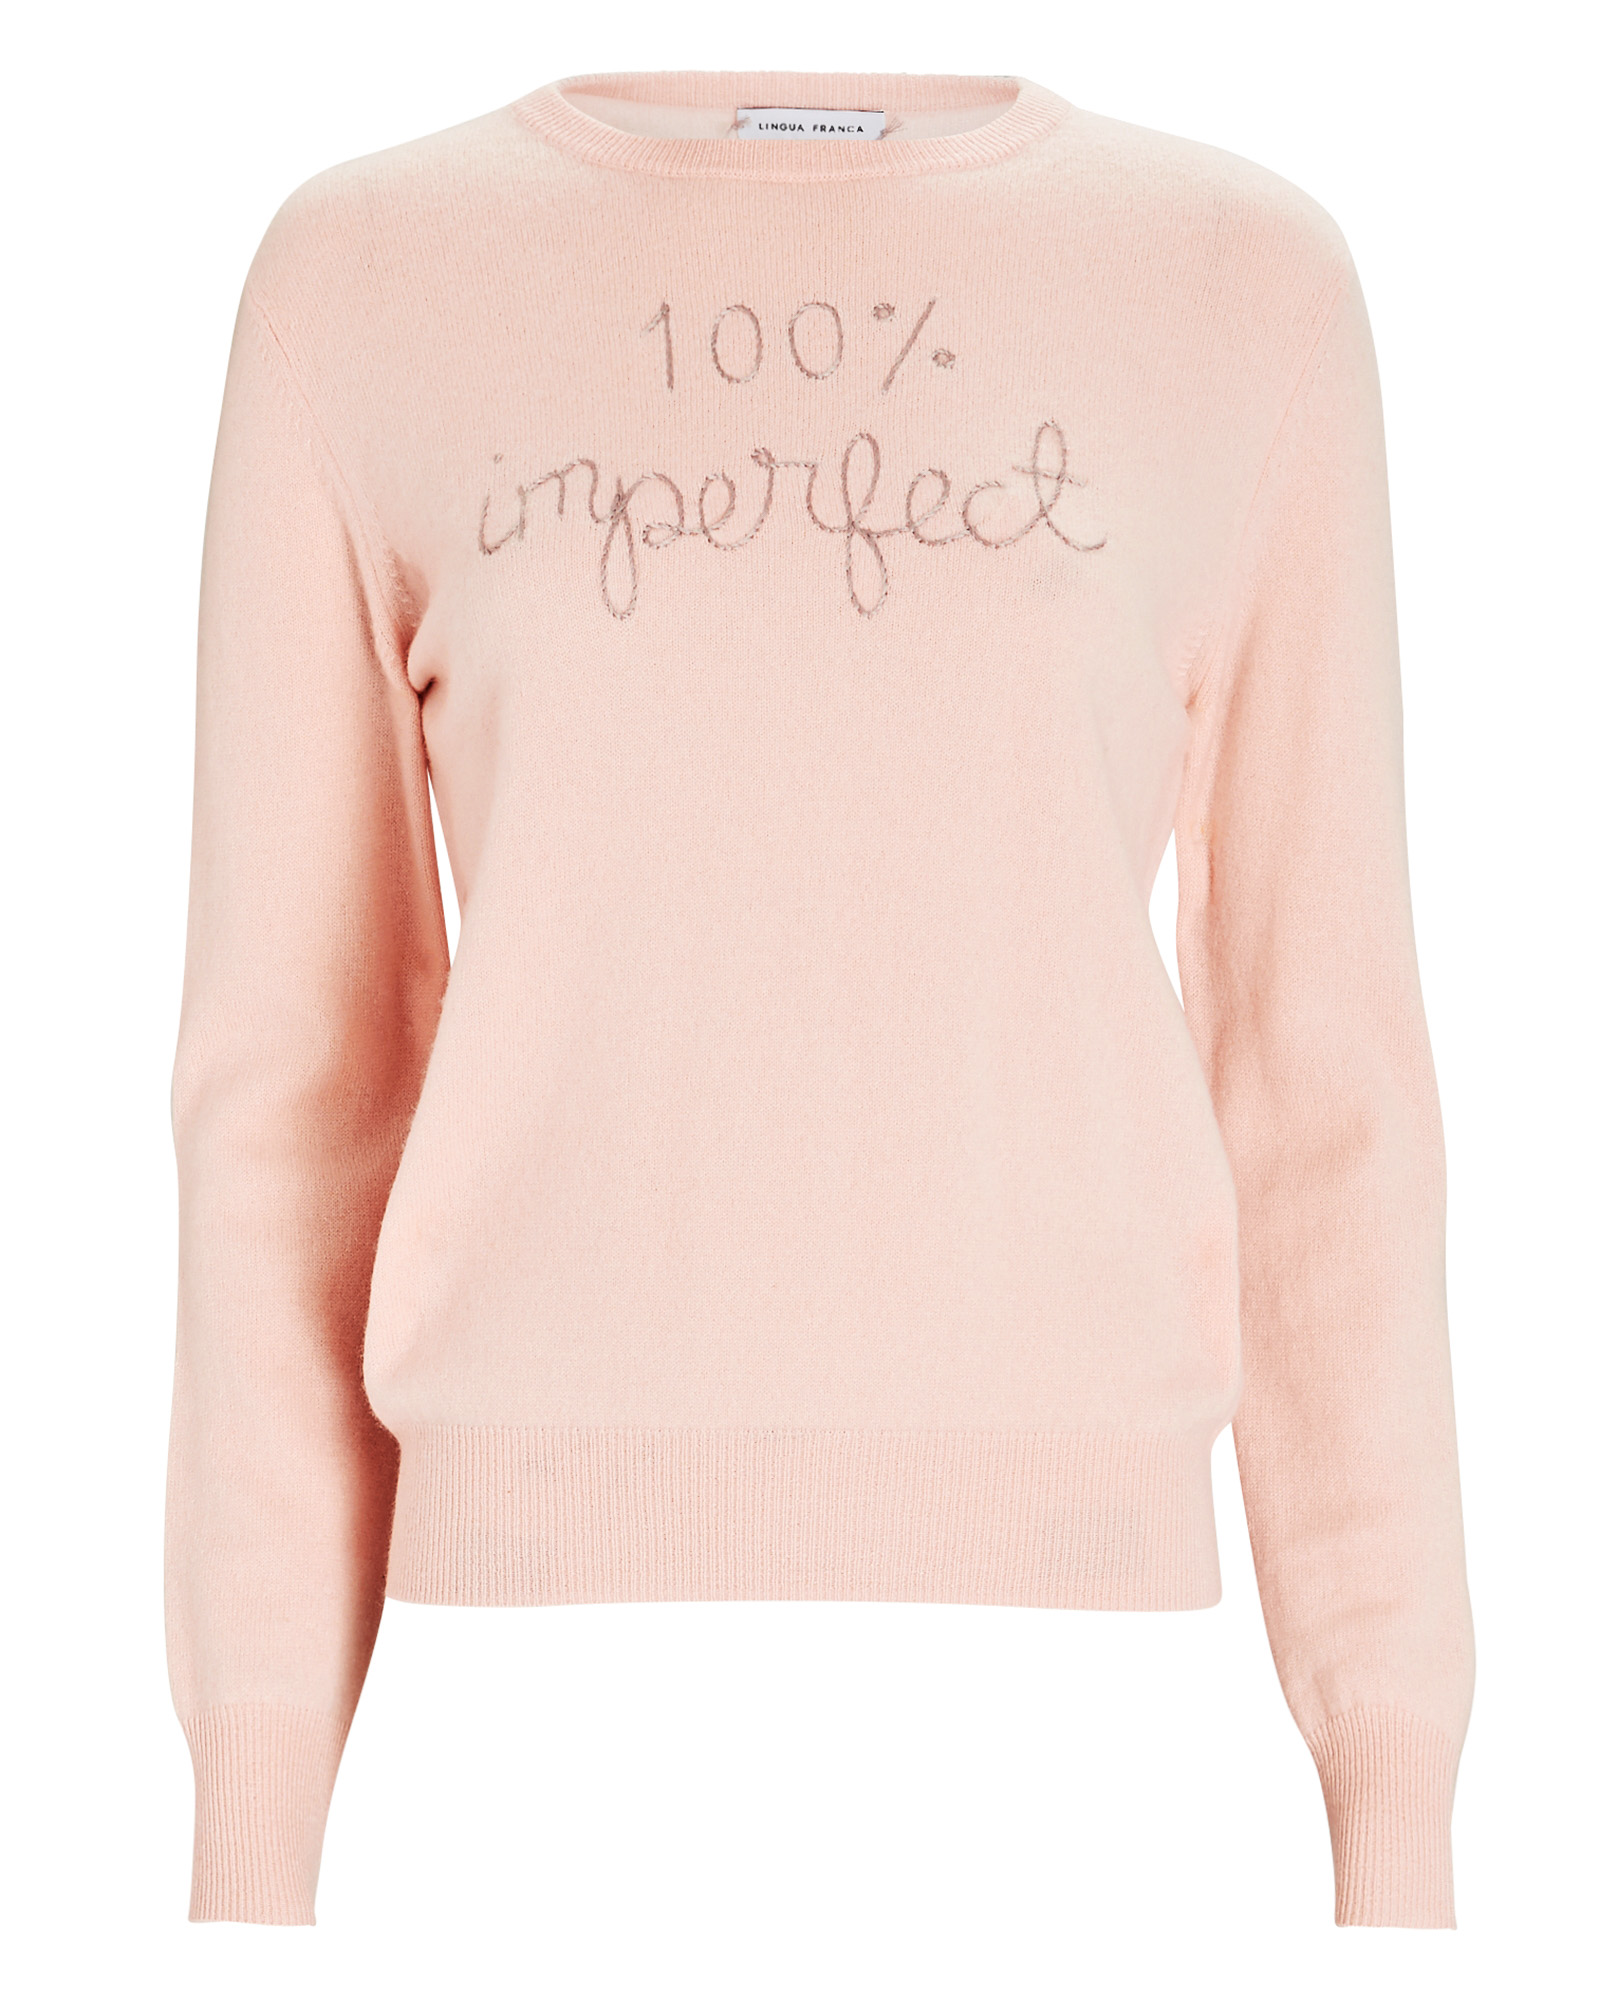 Lingua Franca Imperfect Cashmere Crewneck Sweater | INTERMIX®